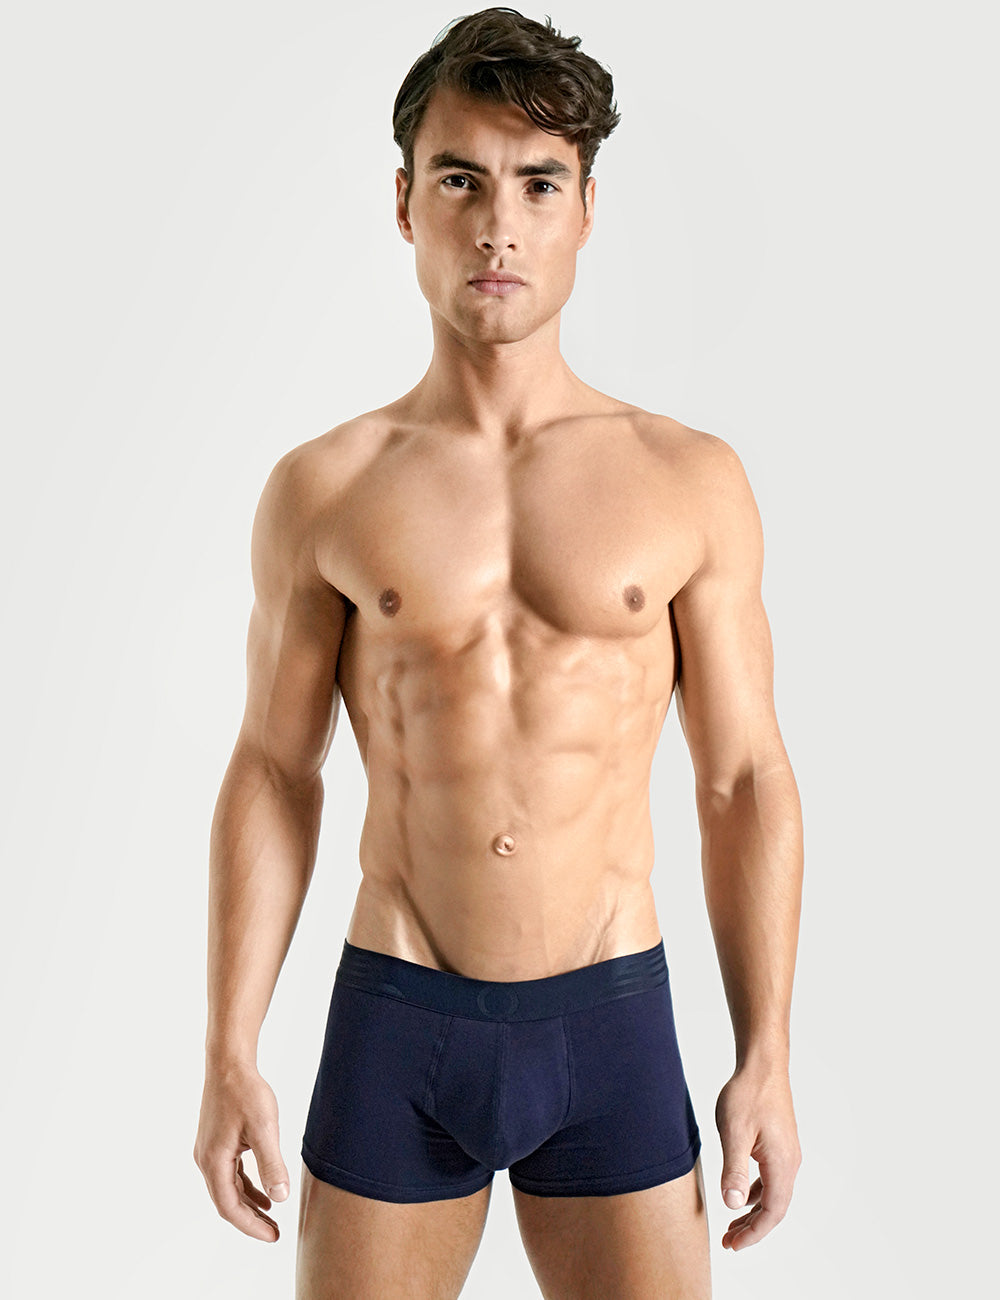 The Tinge Men's Eazy Premium V-Shape Underwear for Men and Boys|Men's Solid  Underwear (Pack of 6)